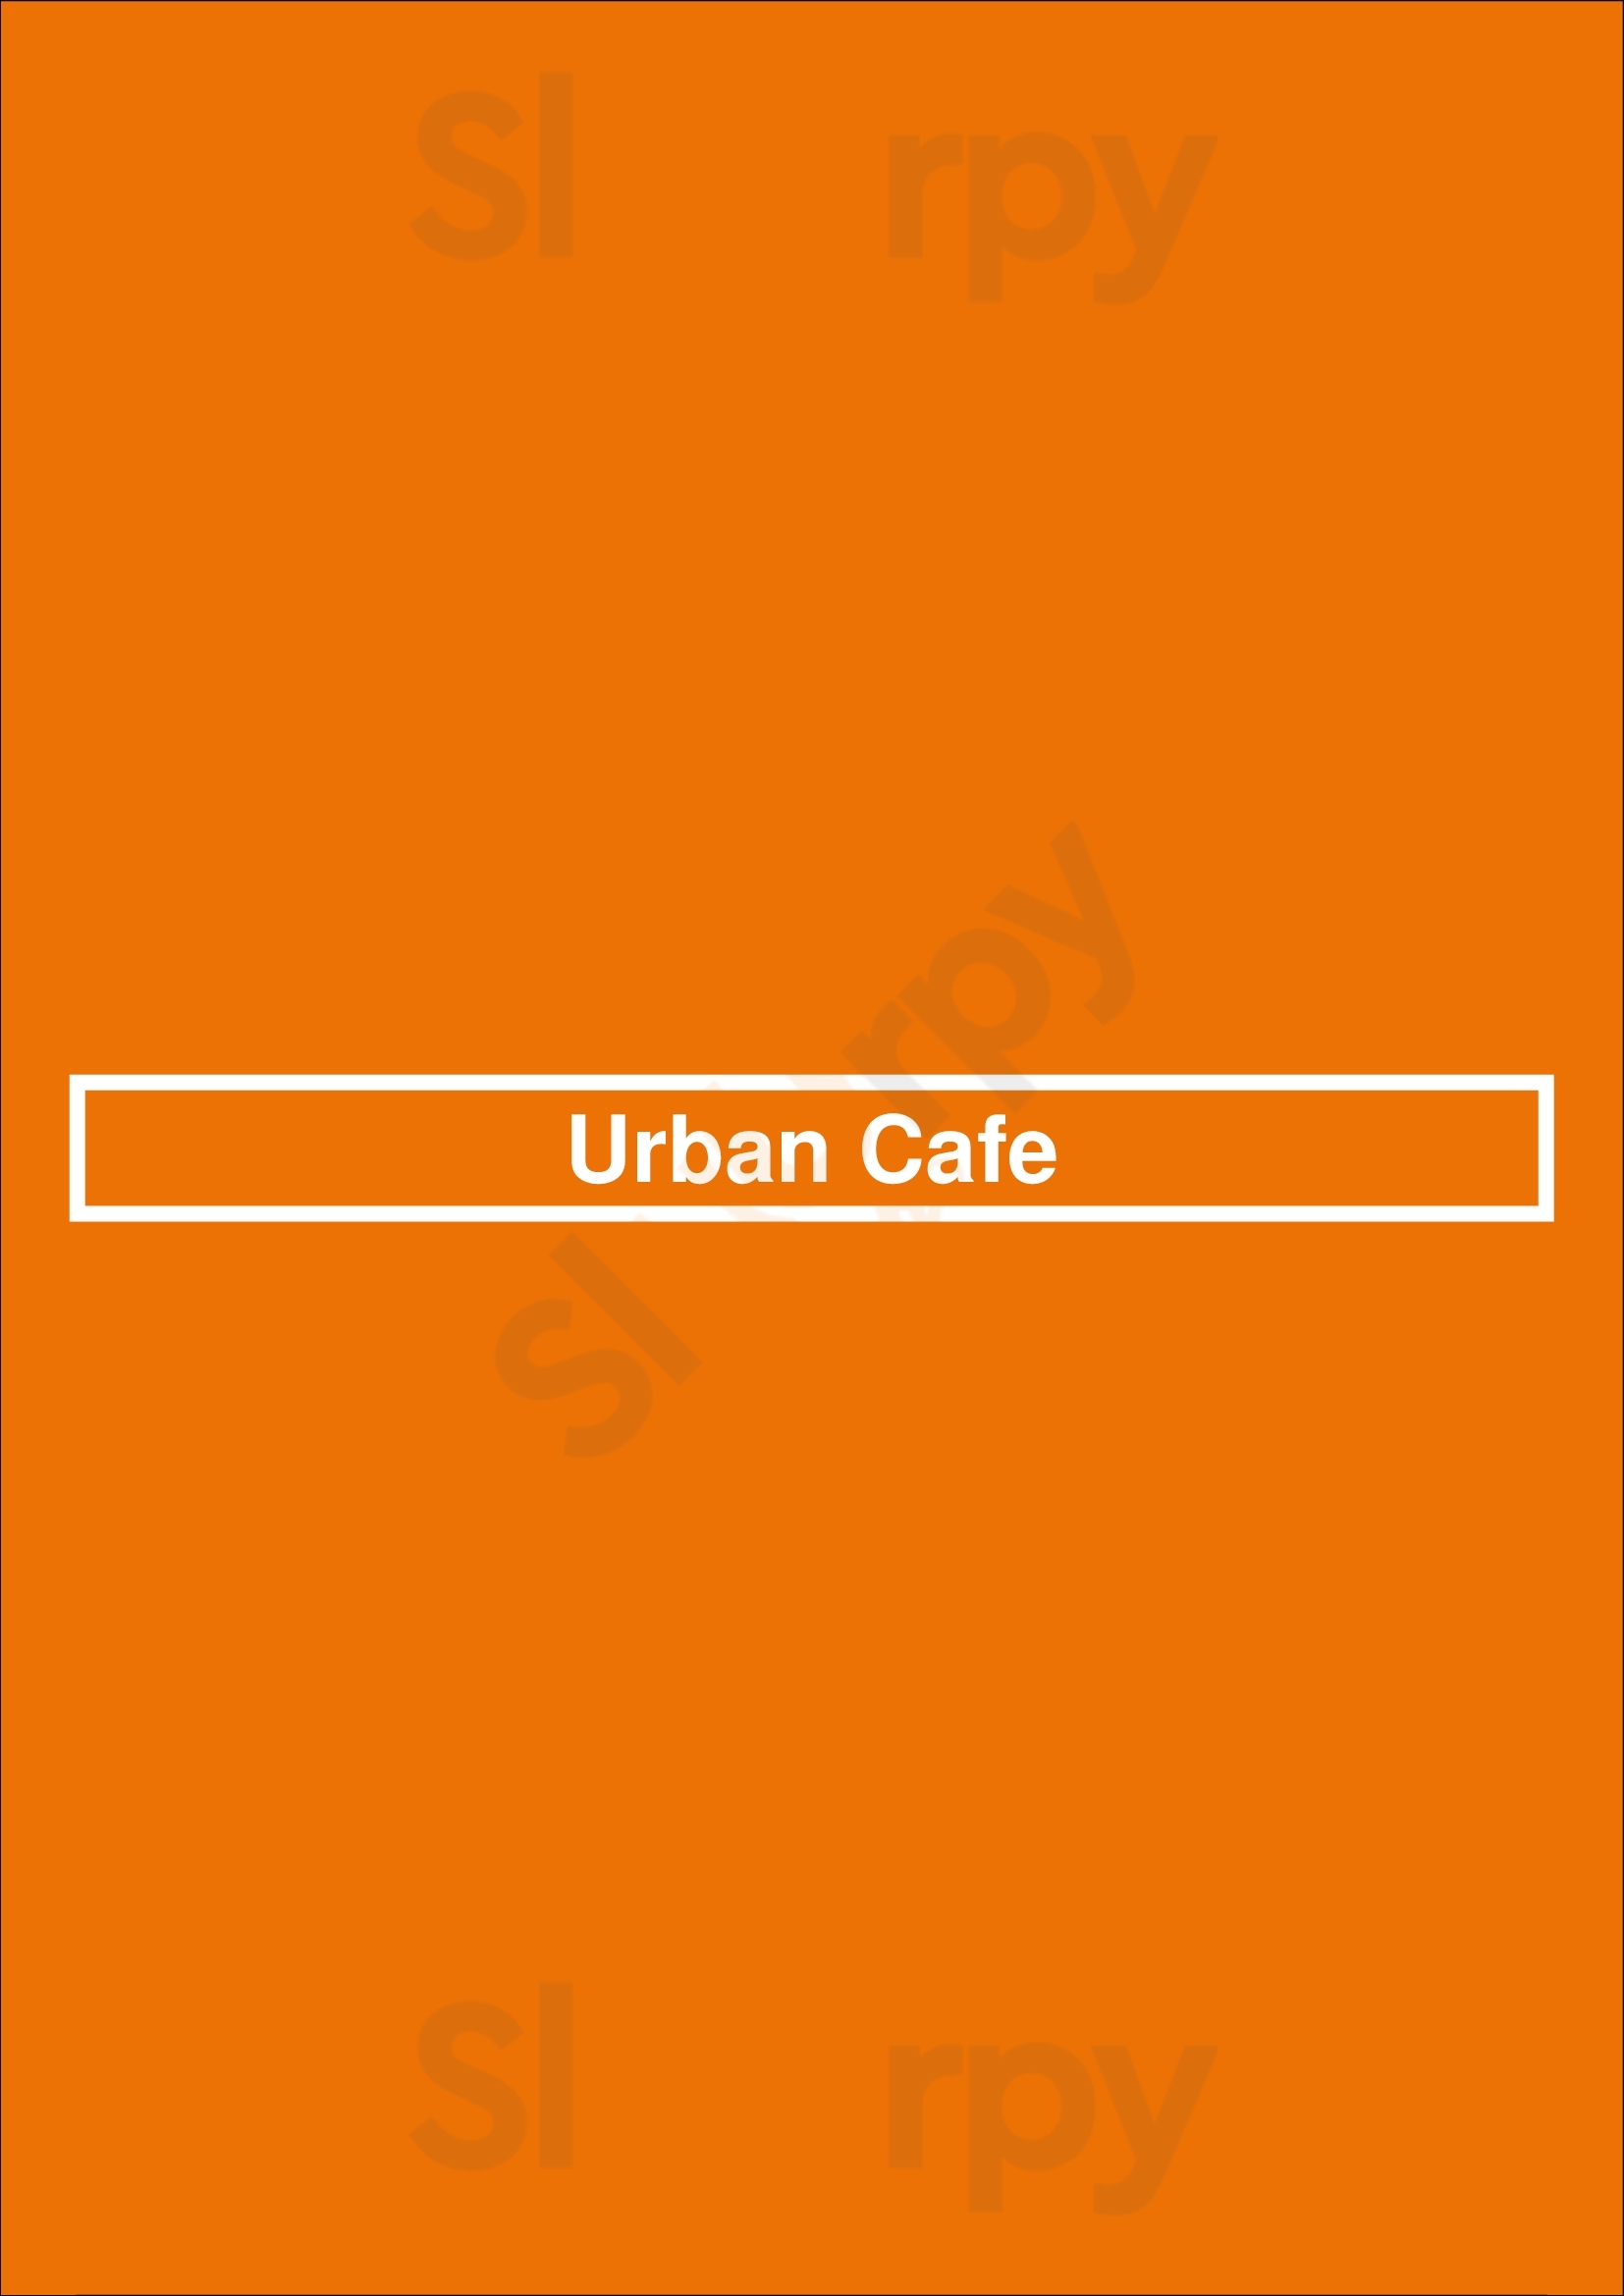 Urban Cafe Wilmington Menu - 1